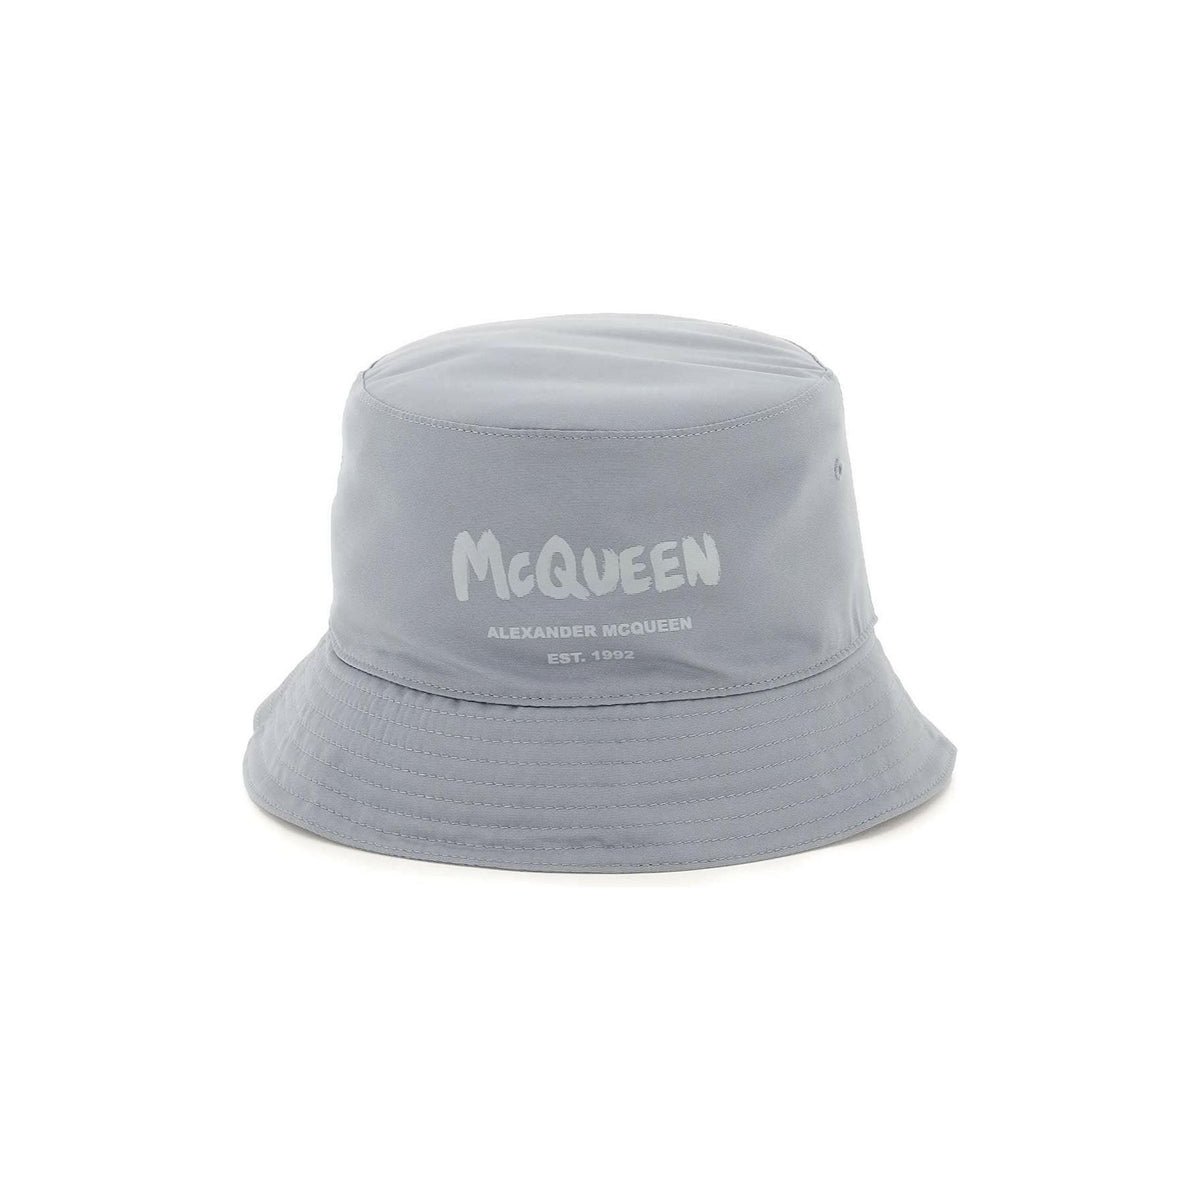 McQueen Graffiti Bucket Hat ALEXANDER MCQUEEN JOHN JULIA.